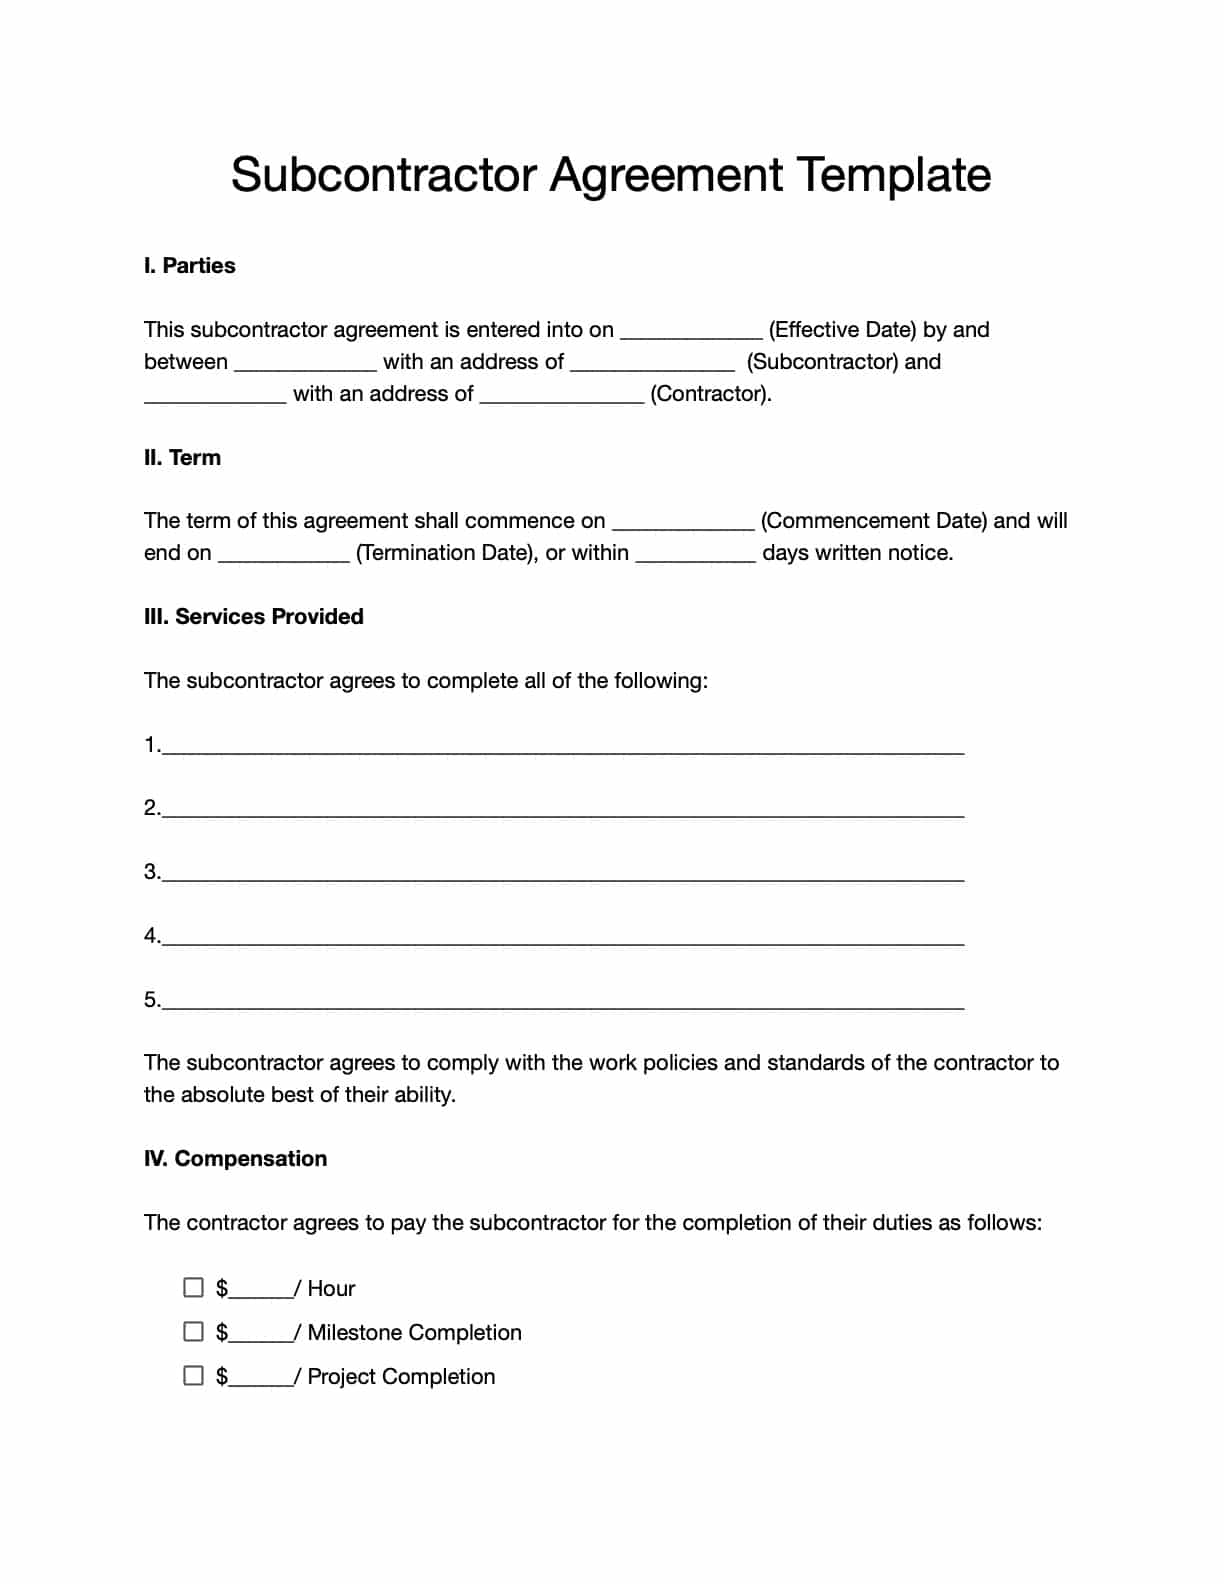 Subcontractor Agreement